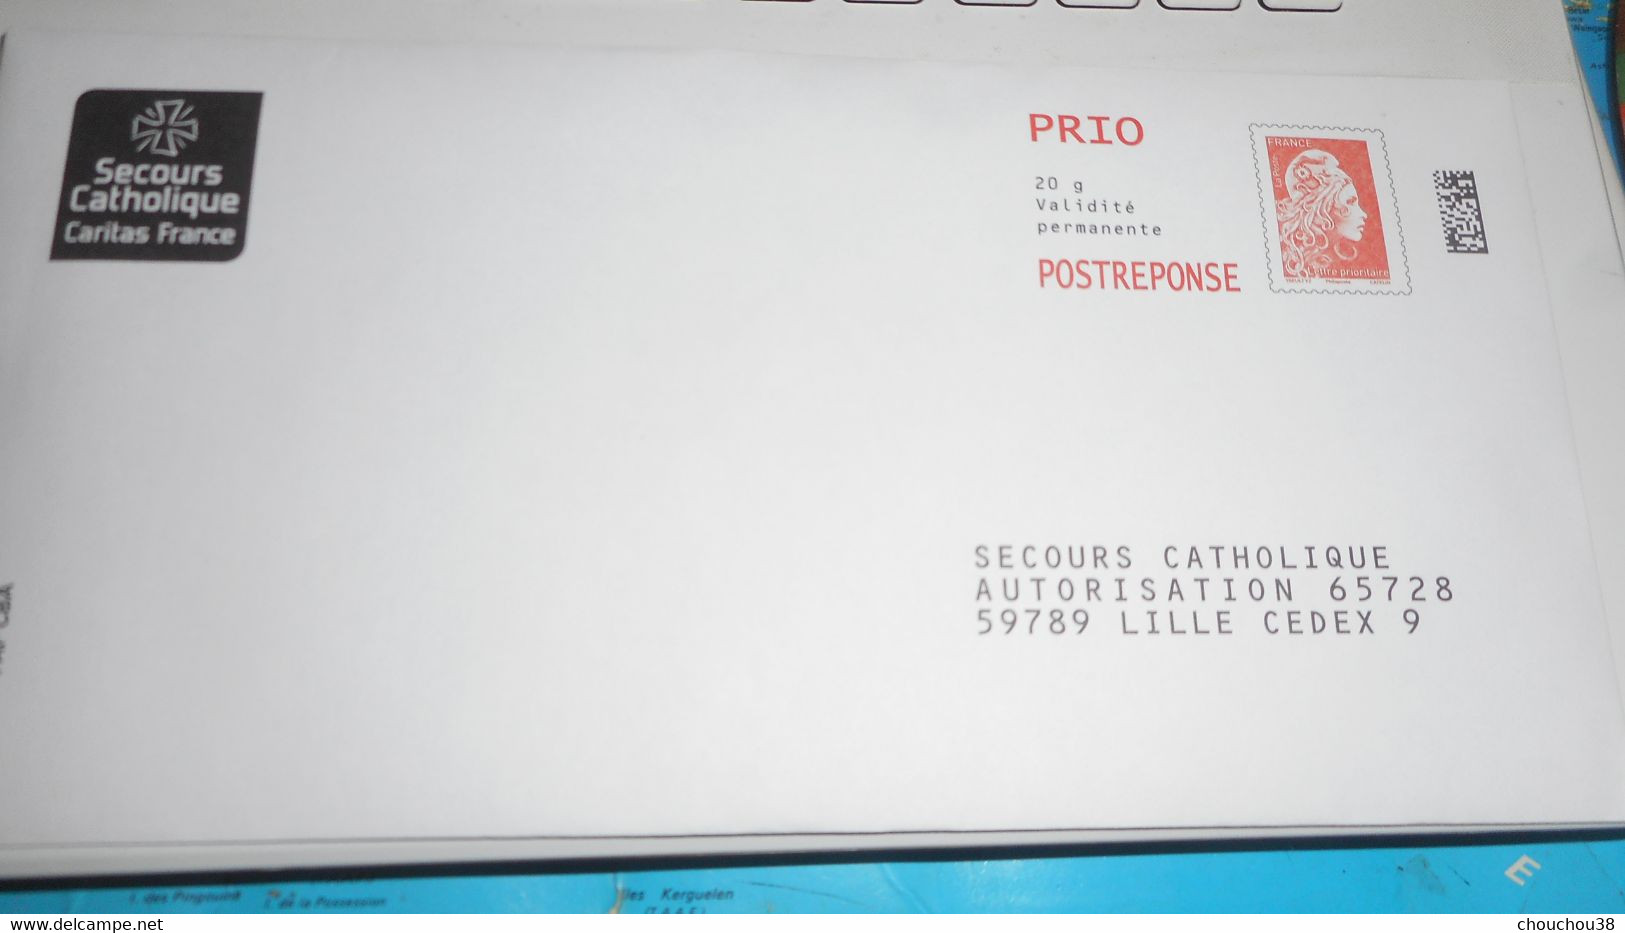 Enveloppe PAP - Prio "SECOURS CATHOLIQUE" - Prêts-à-poster:reply